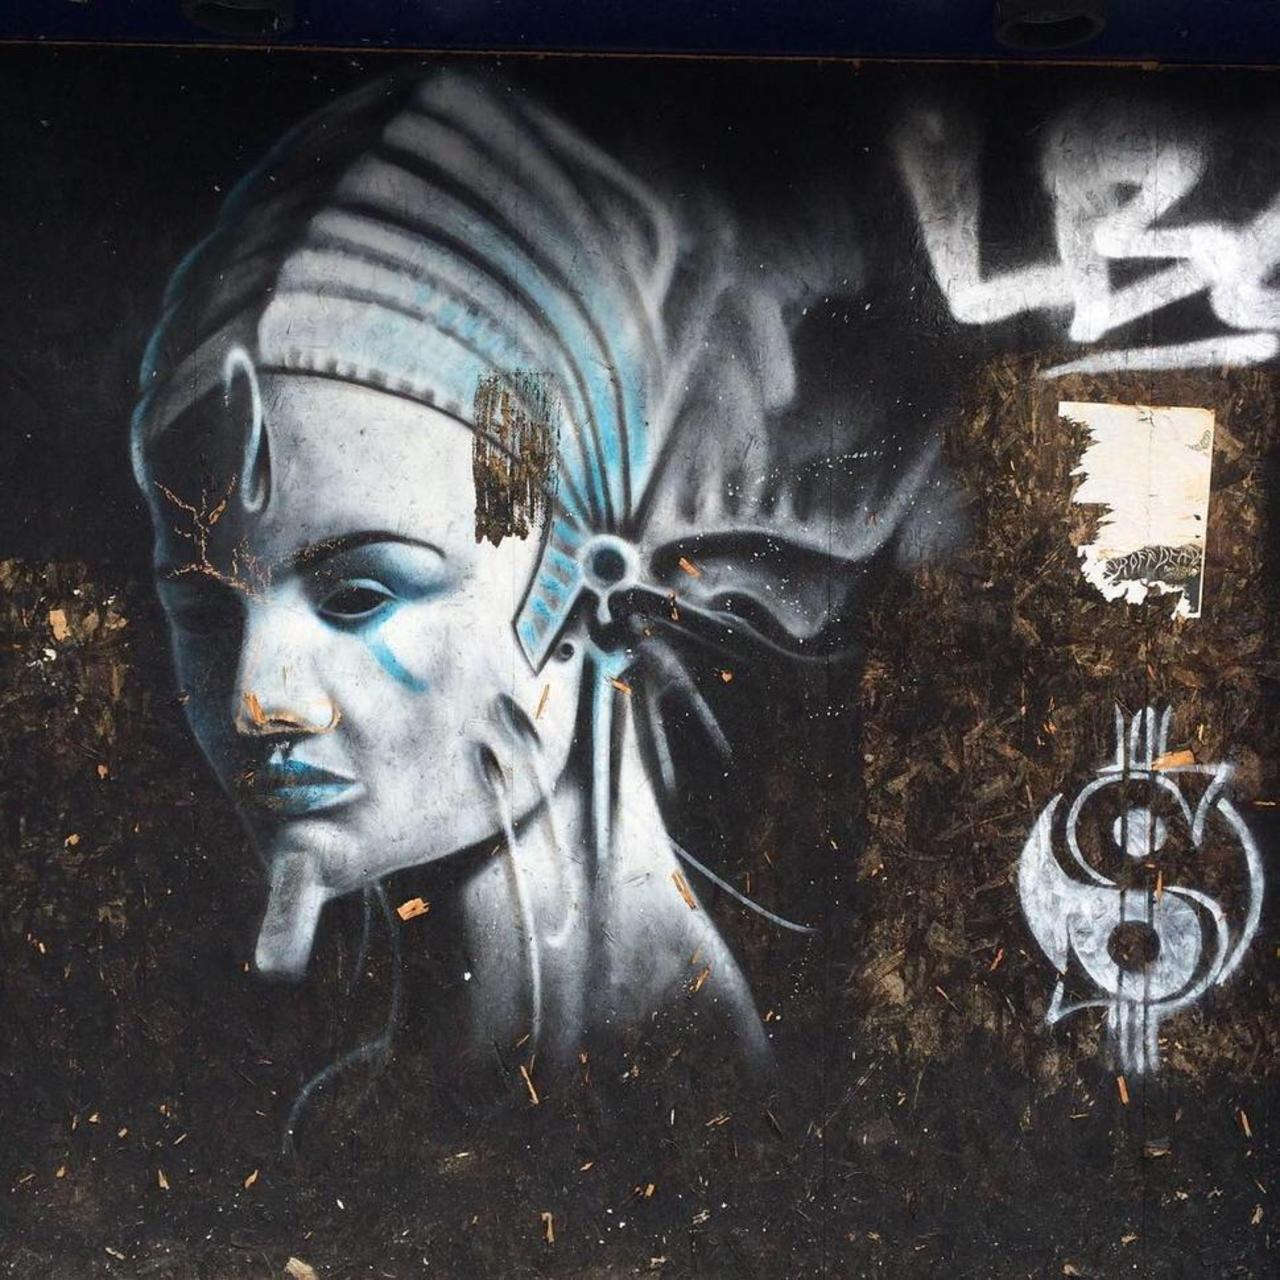 RT @JMgazouille: #StreetArt 526
#Graff #Graffiti #Art #urbanart 
#france #PuyDeDôme #Clermont
09/2015

 https://instagram.com/p/7zuinZm69E/ http://t.co/ebQGJmuMP9